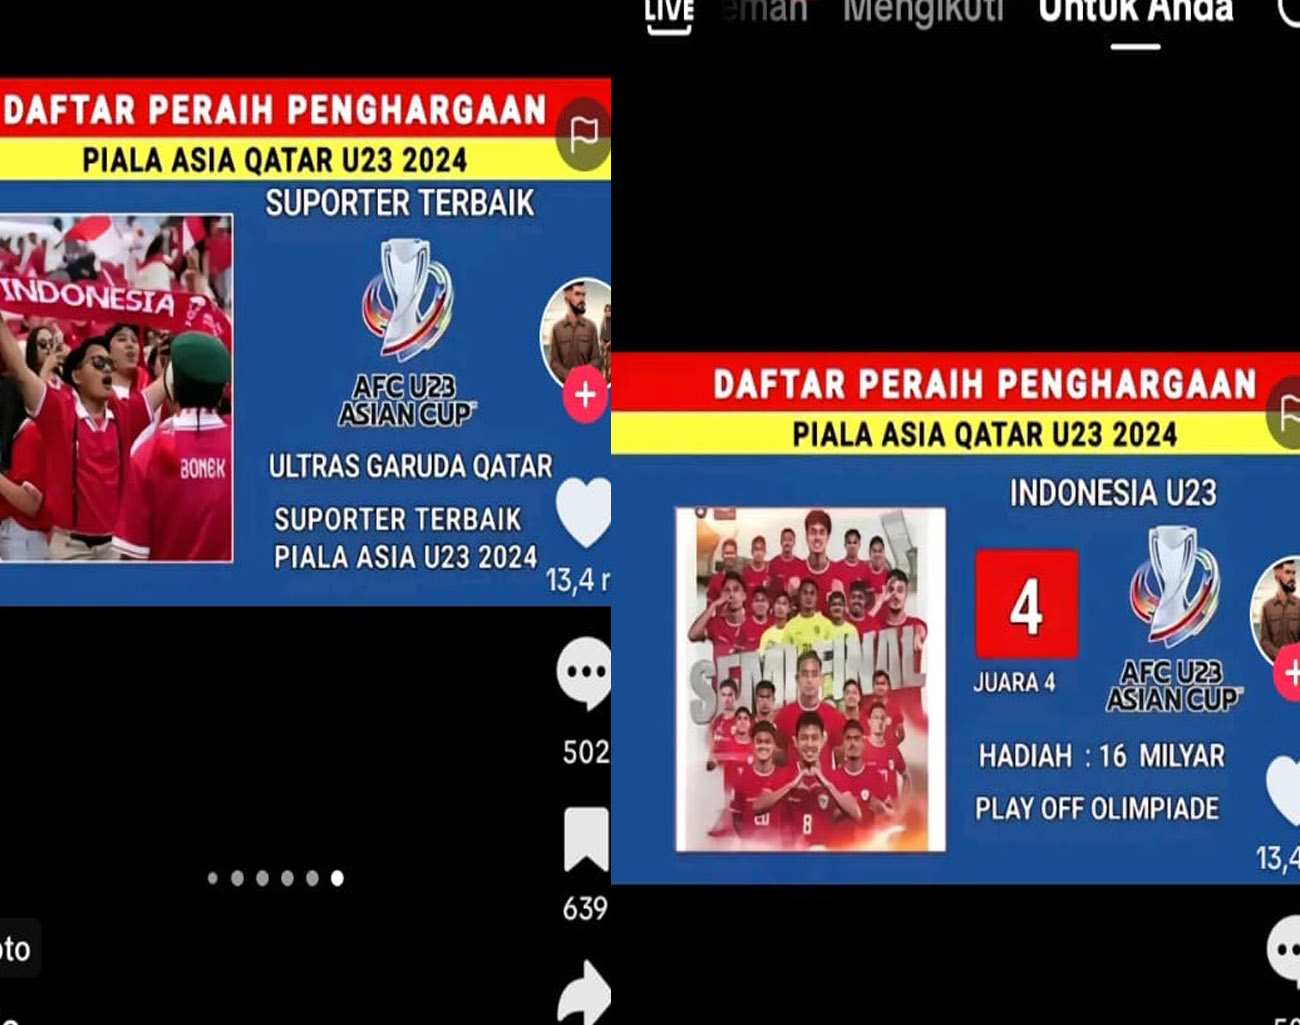 AFC Beri 2 Penghargaan kepada Indonesia Piala Asia U-23 2024, Walaupu Gagal Rebut Juara 1, 2, 3, Piala Asia